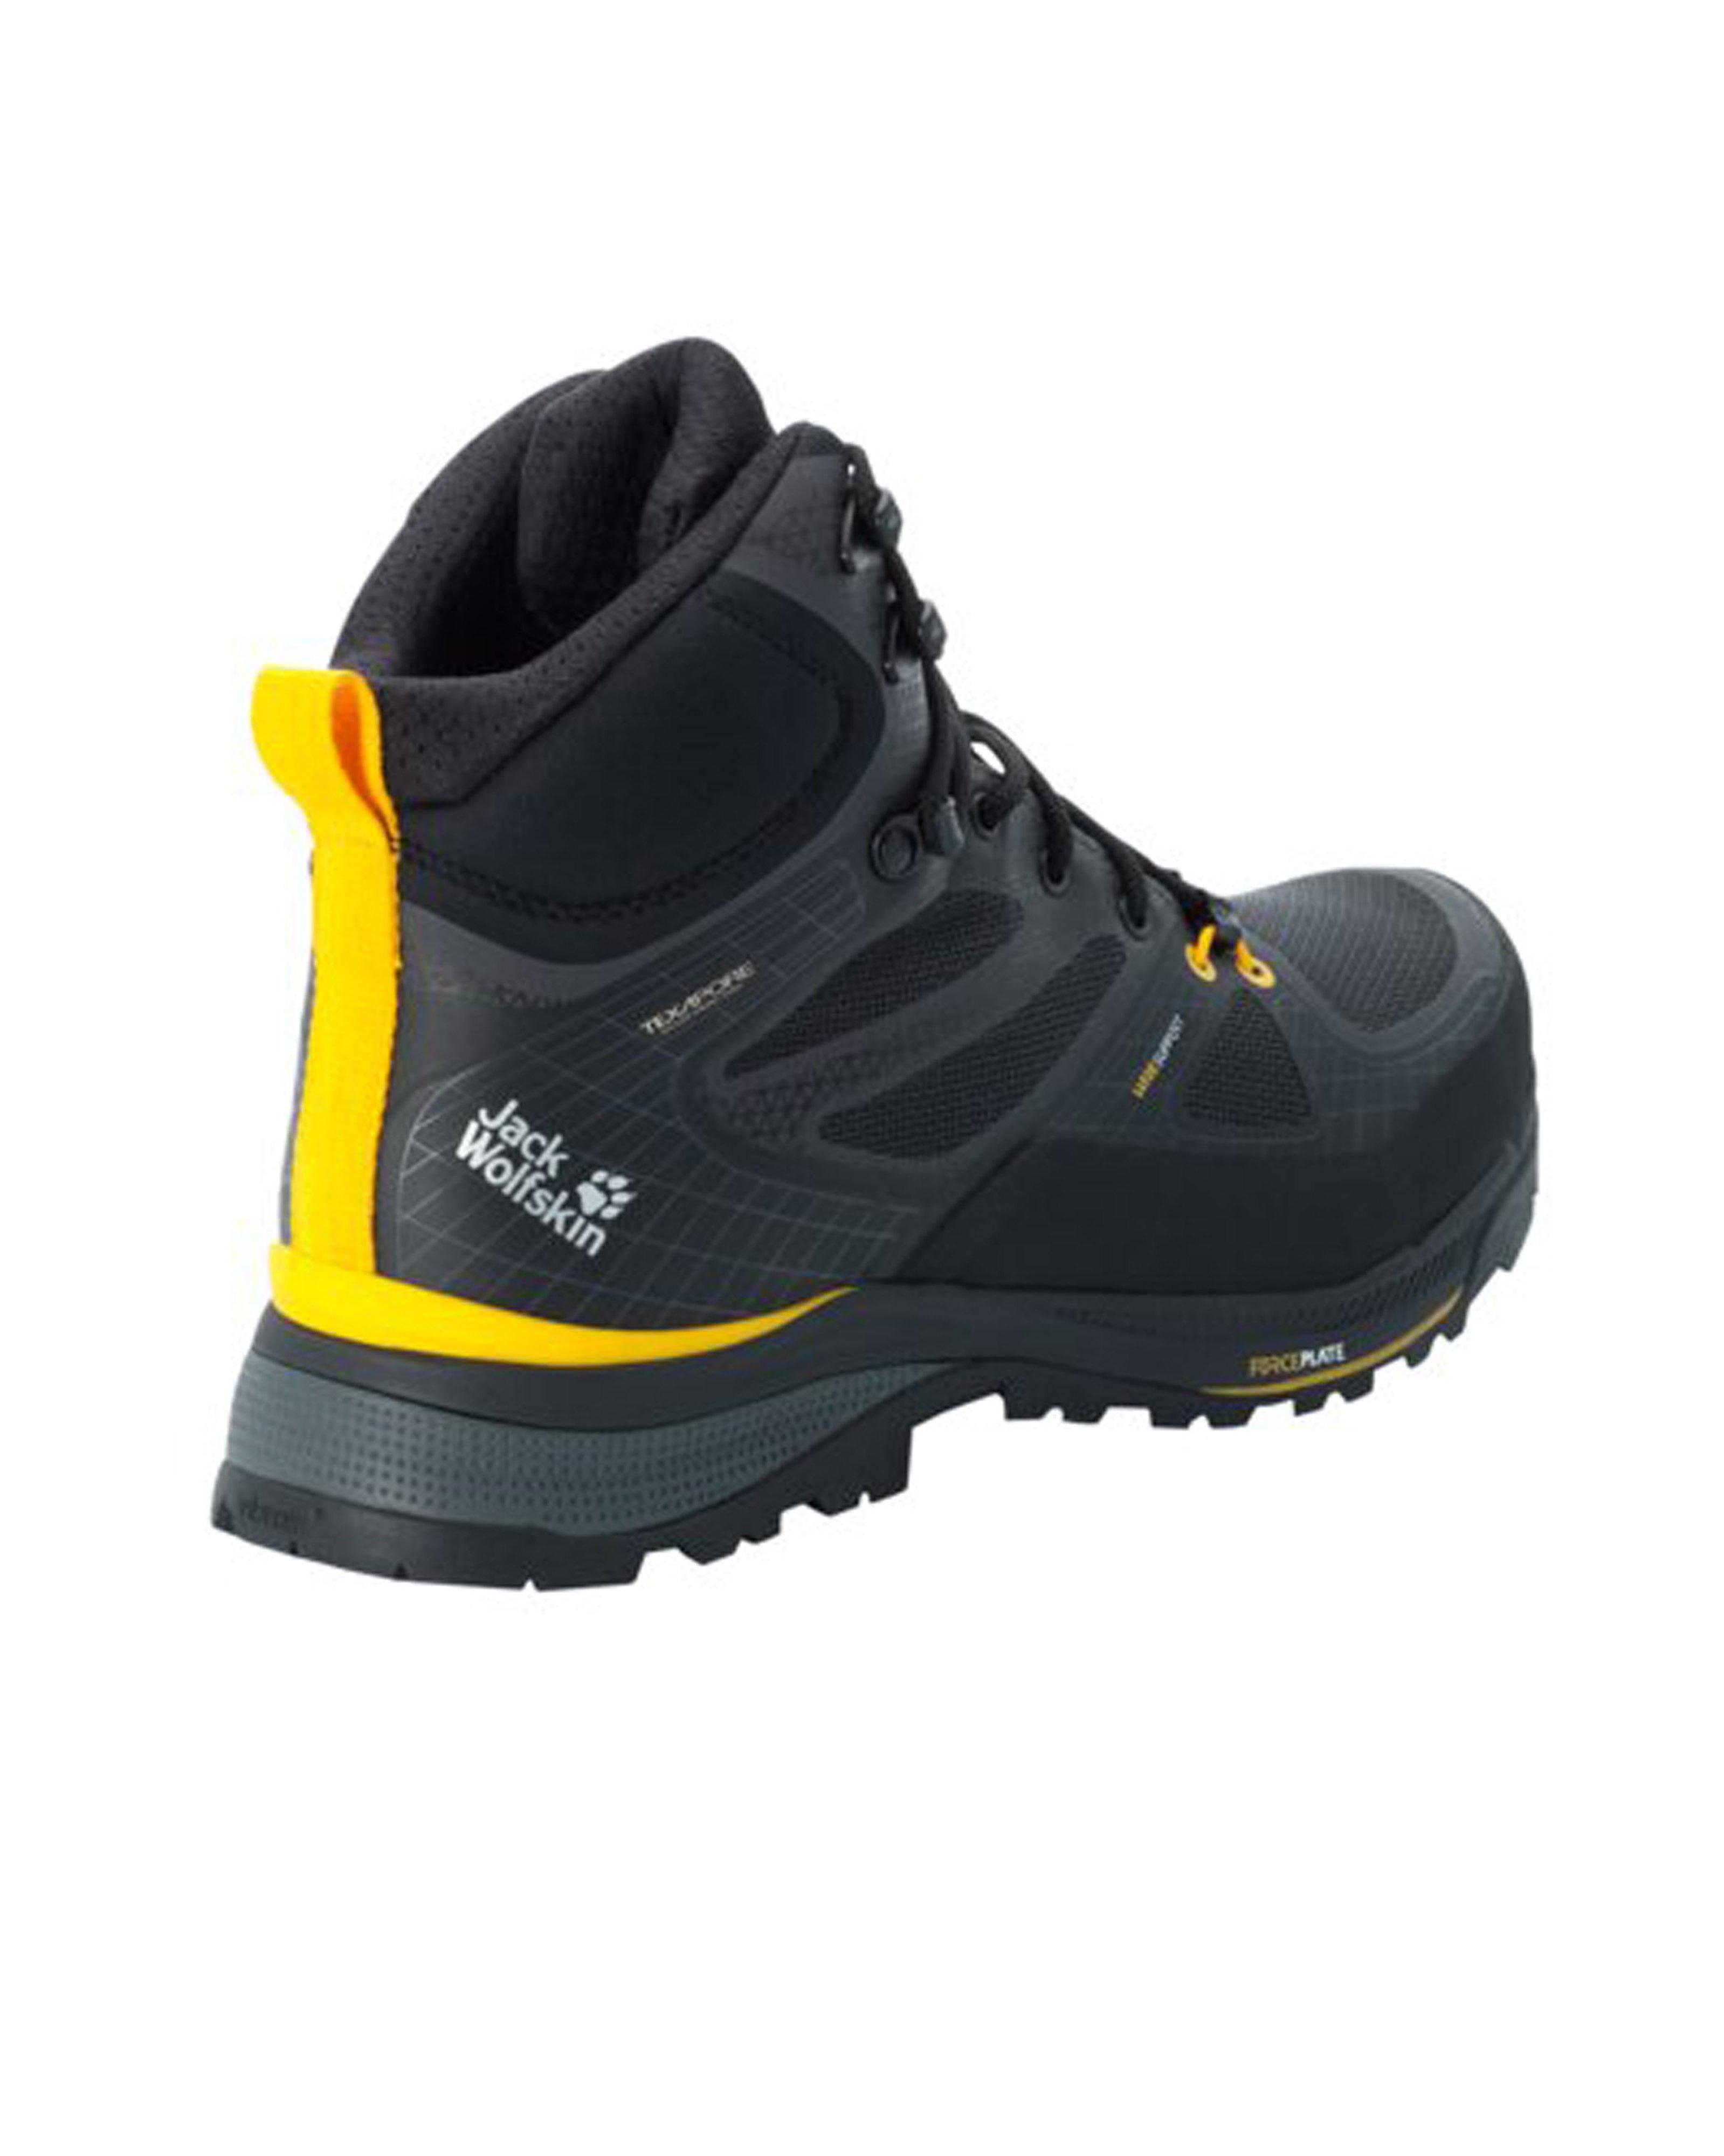 Jack Wolfskin Men's Force Trekker Texapore Mid Hiking Boots  -  Black